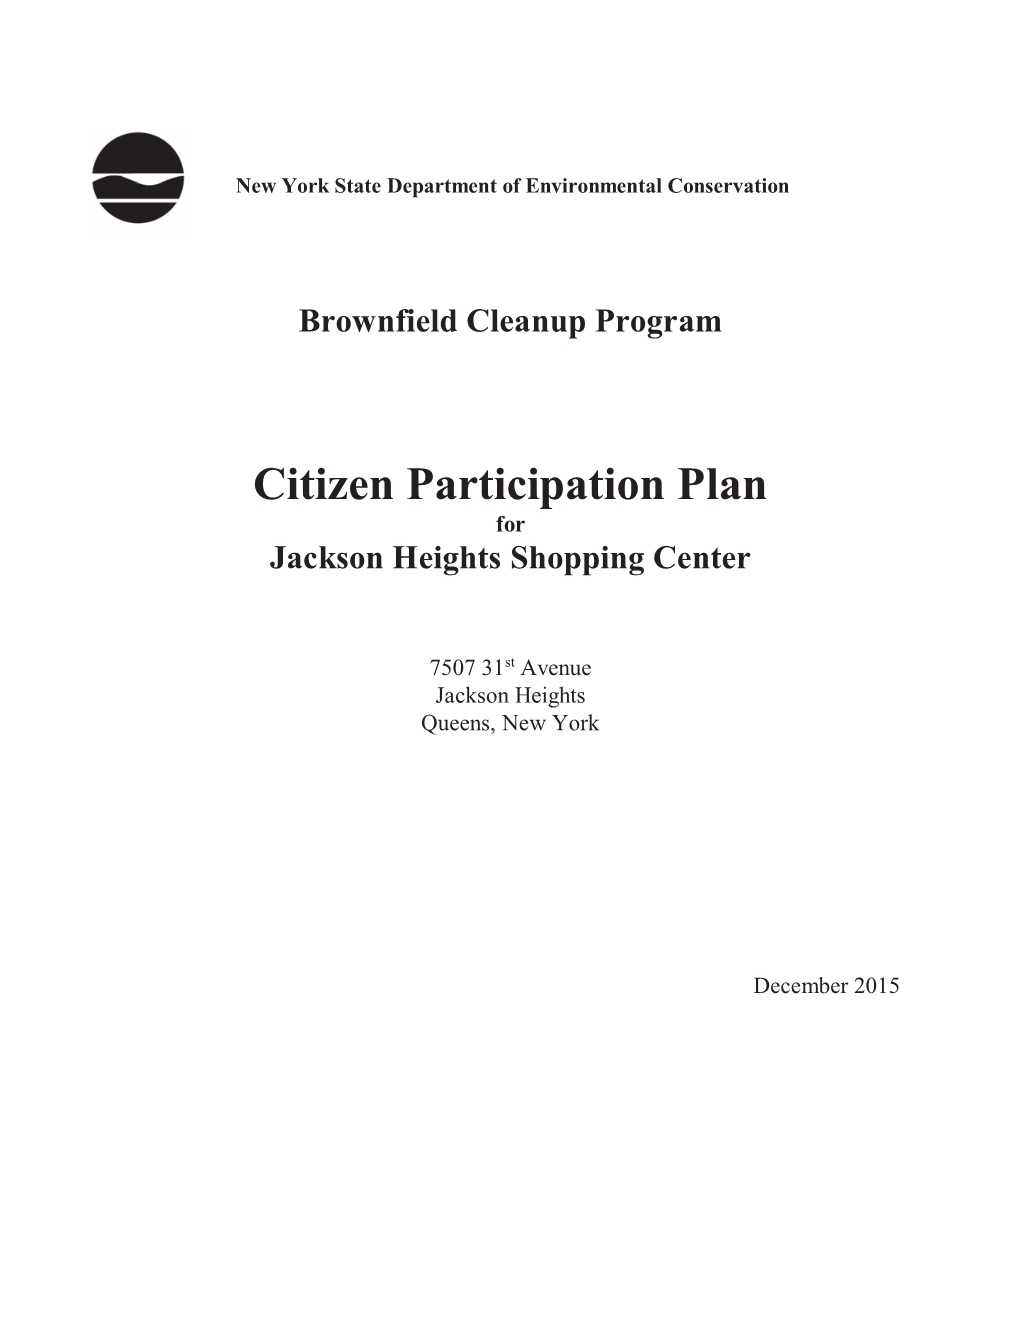 Citizen Participation Plan for Jackson Heights Shopping Center